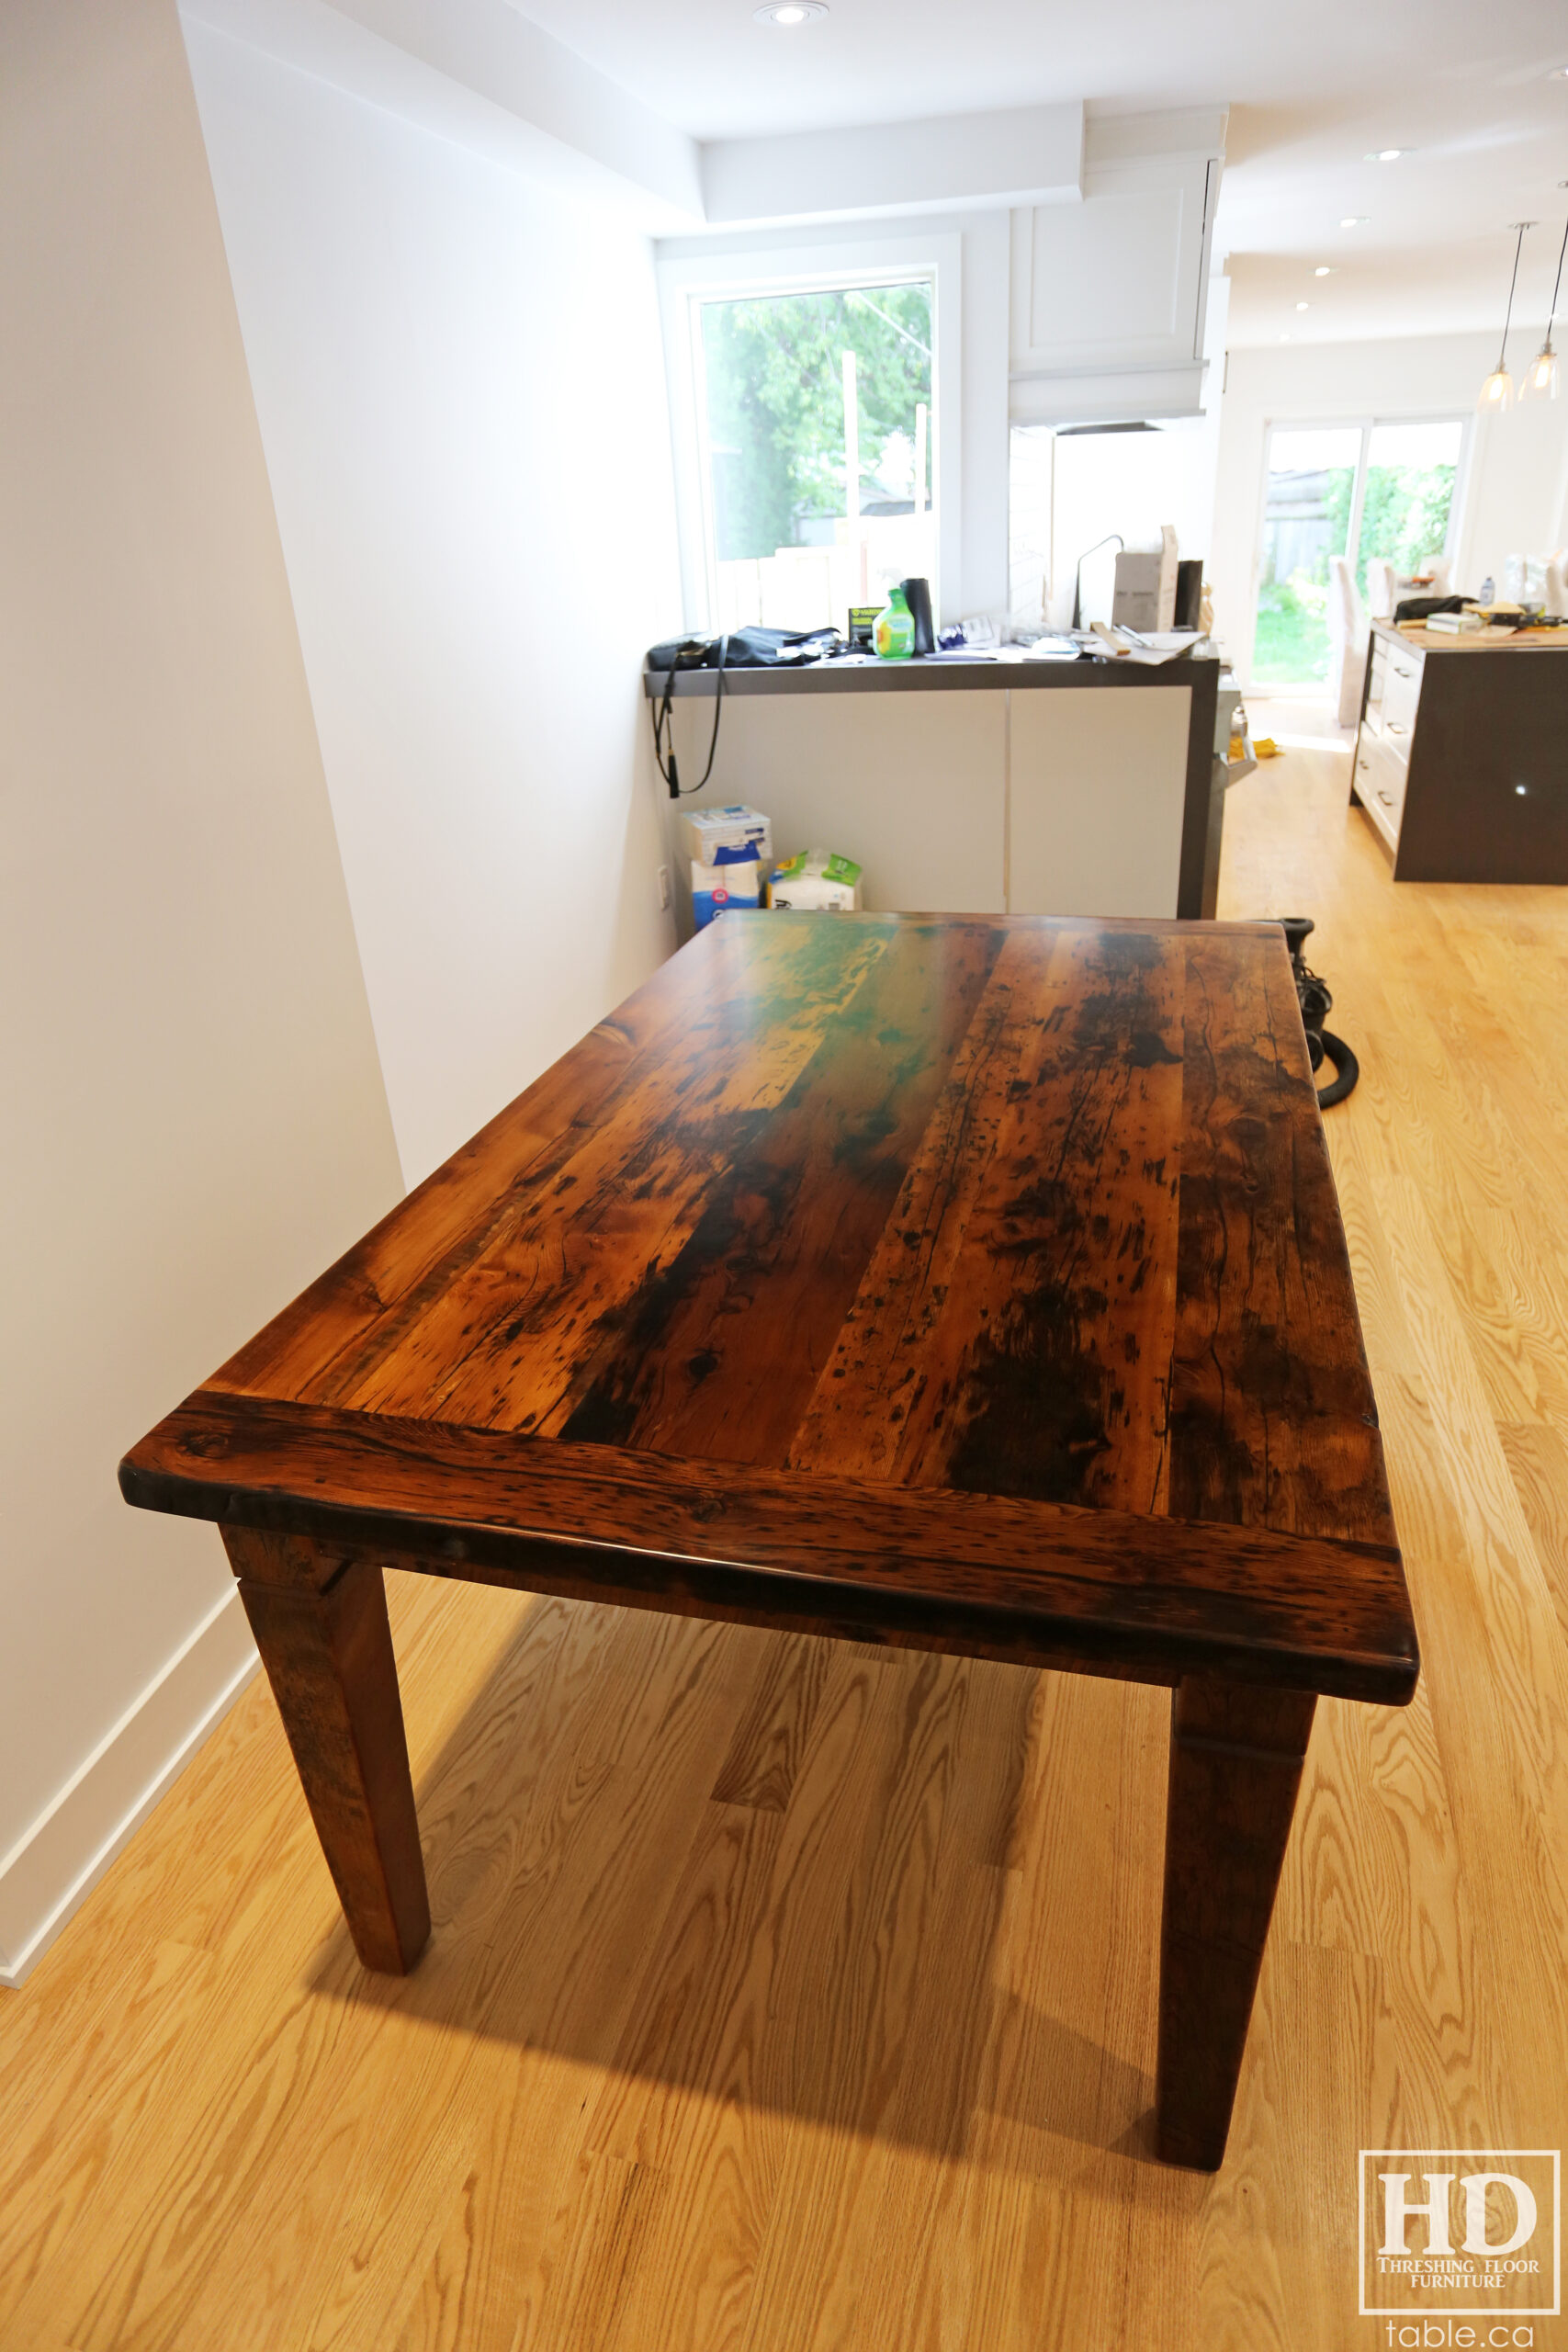 Reclaimed Wood Harvest Table by HD Threshing Floor Furniture / www.table.ca